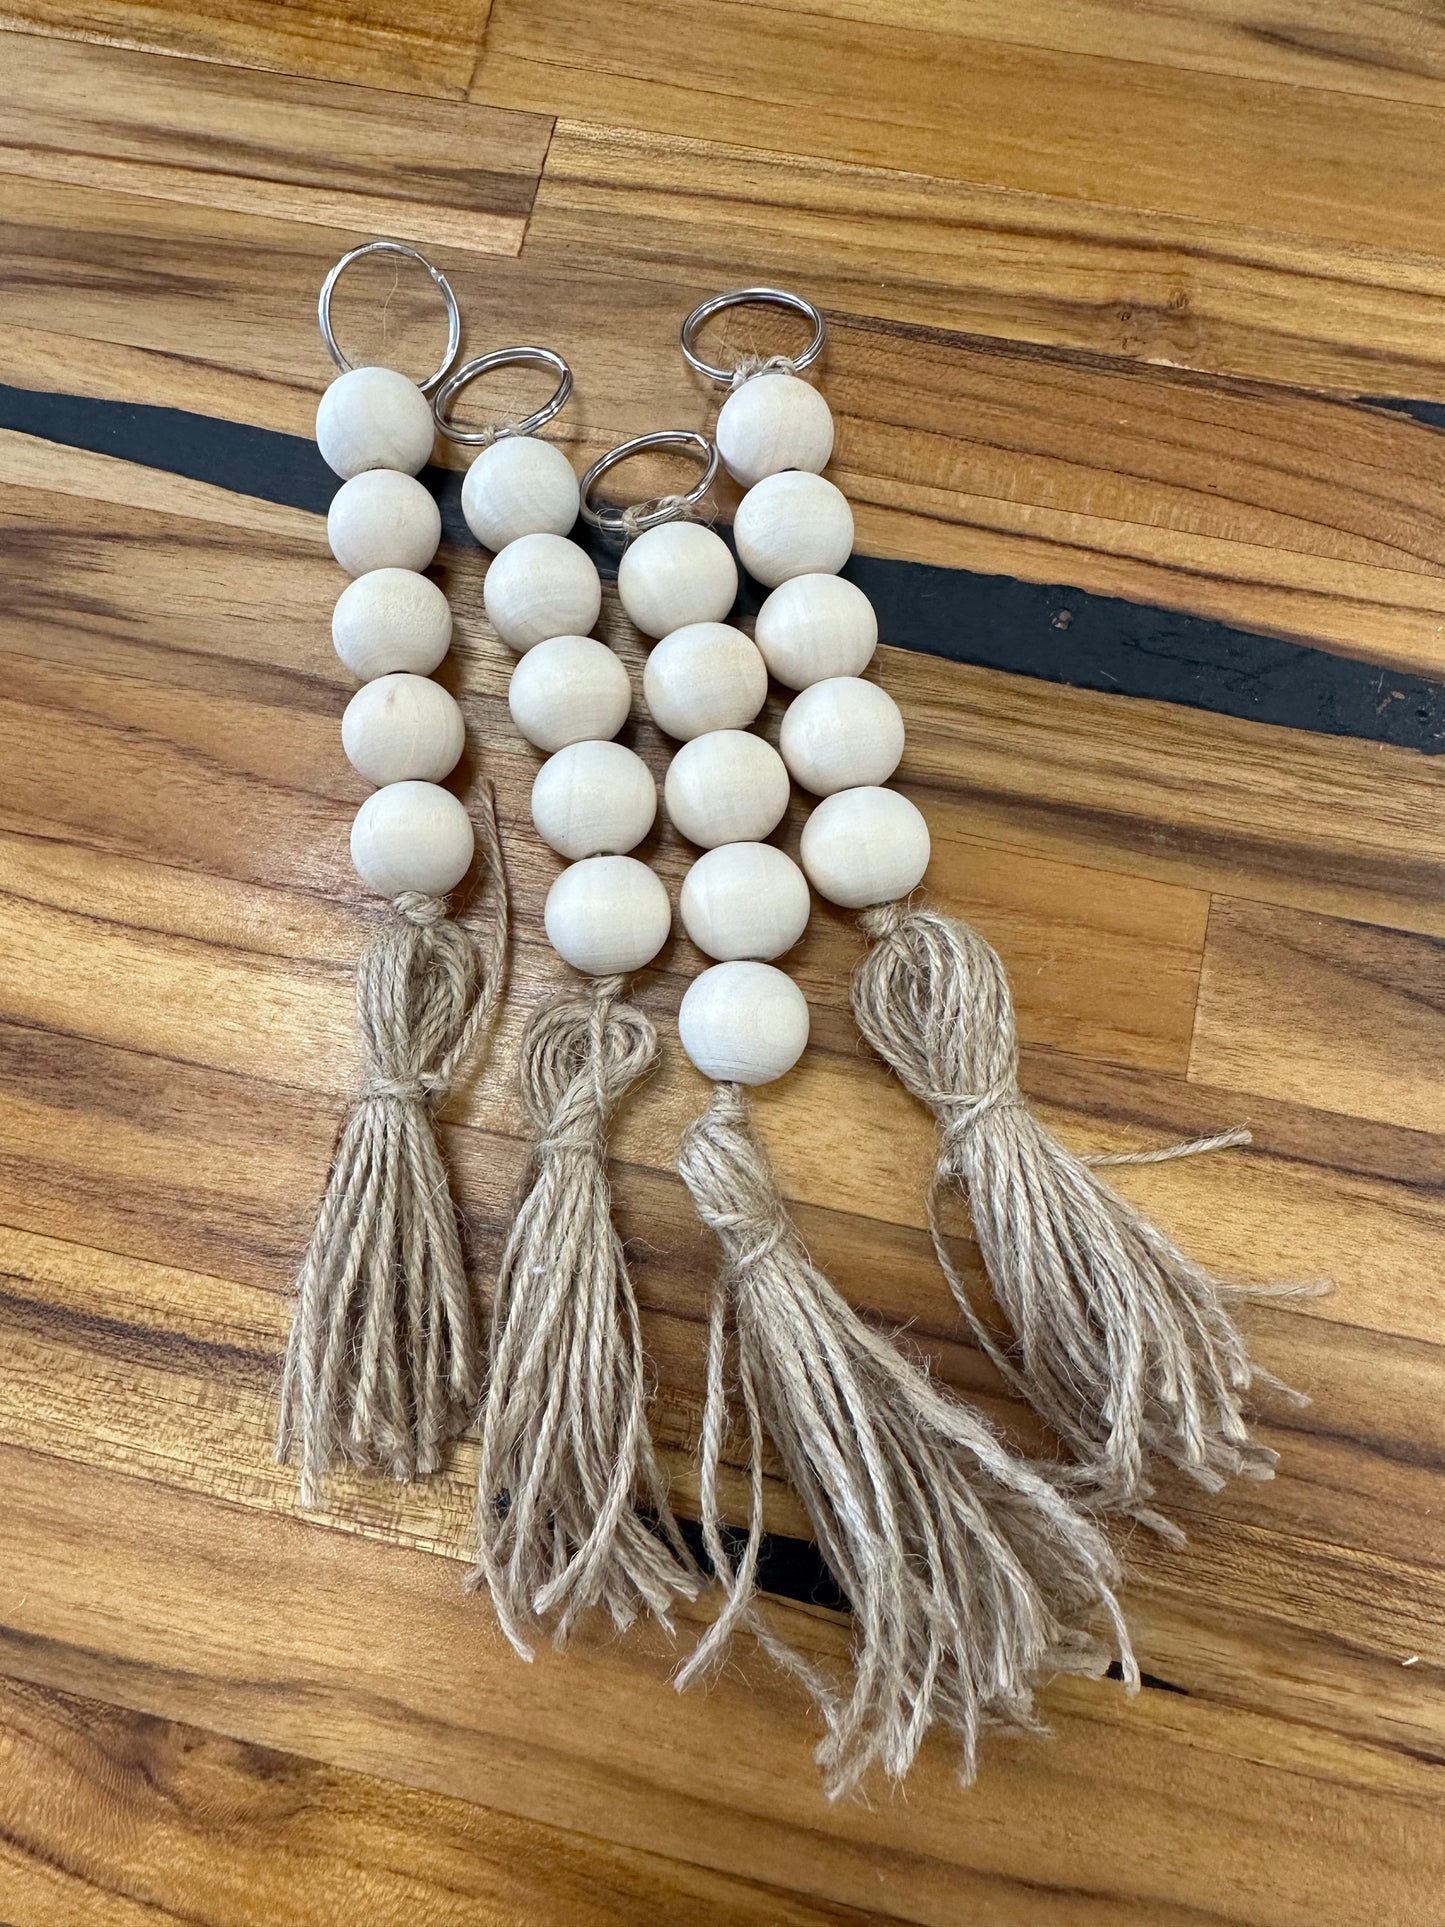 Wooden Ball Keychain with string tassel